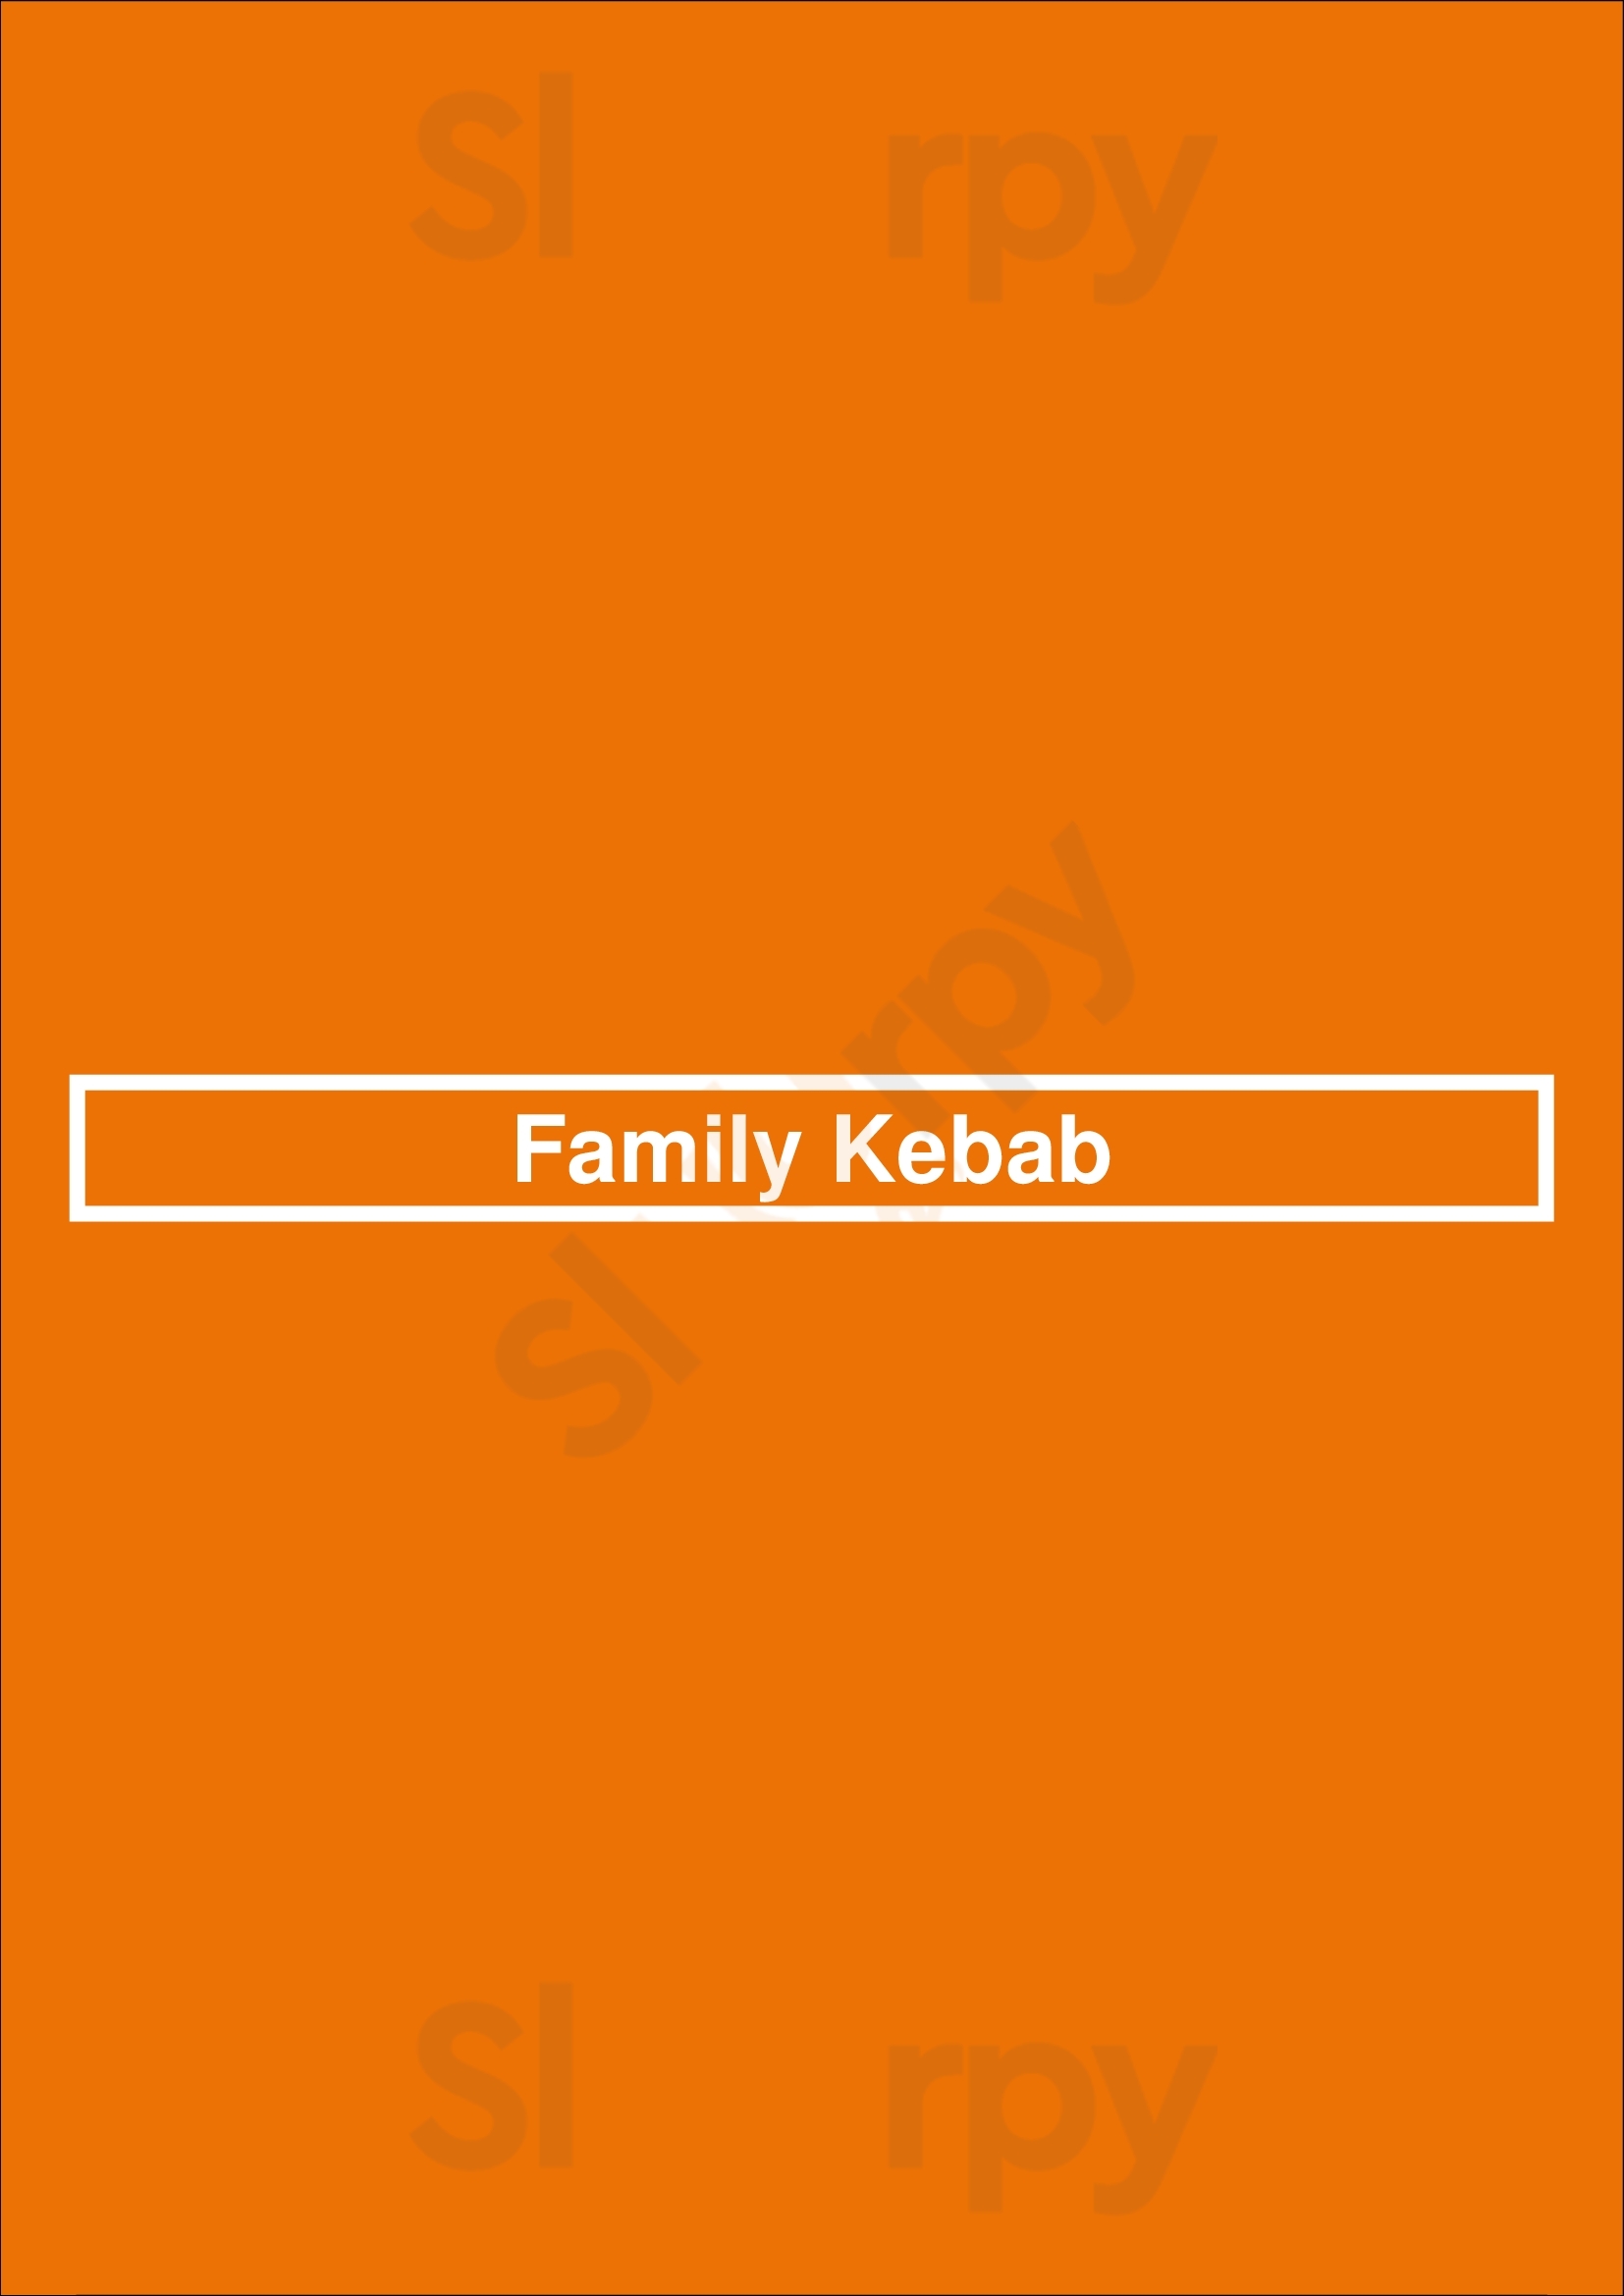 Family Kebab Caerphilly Menu - 1